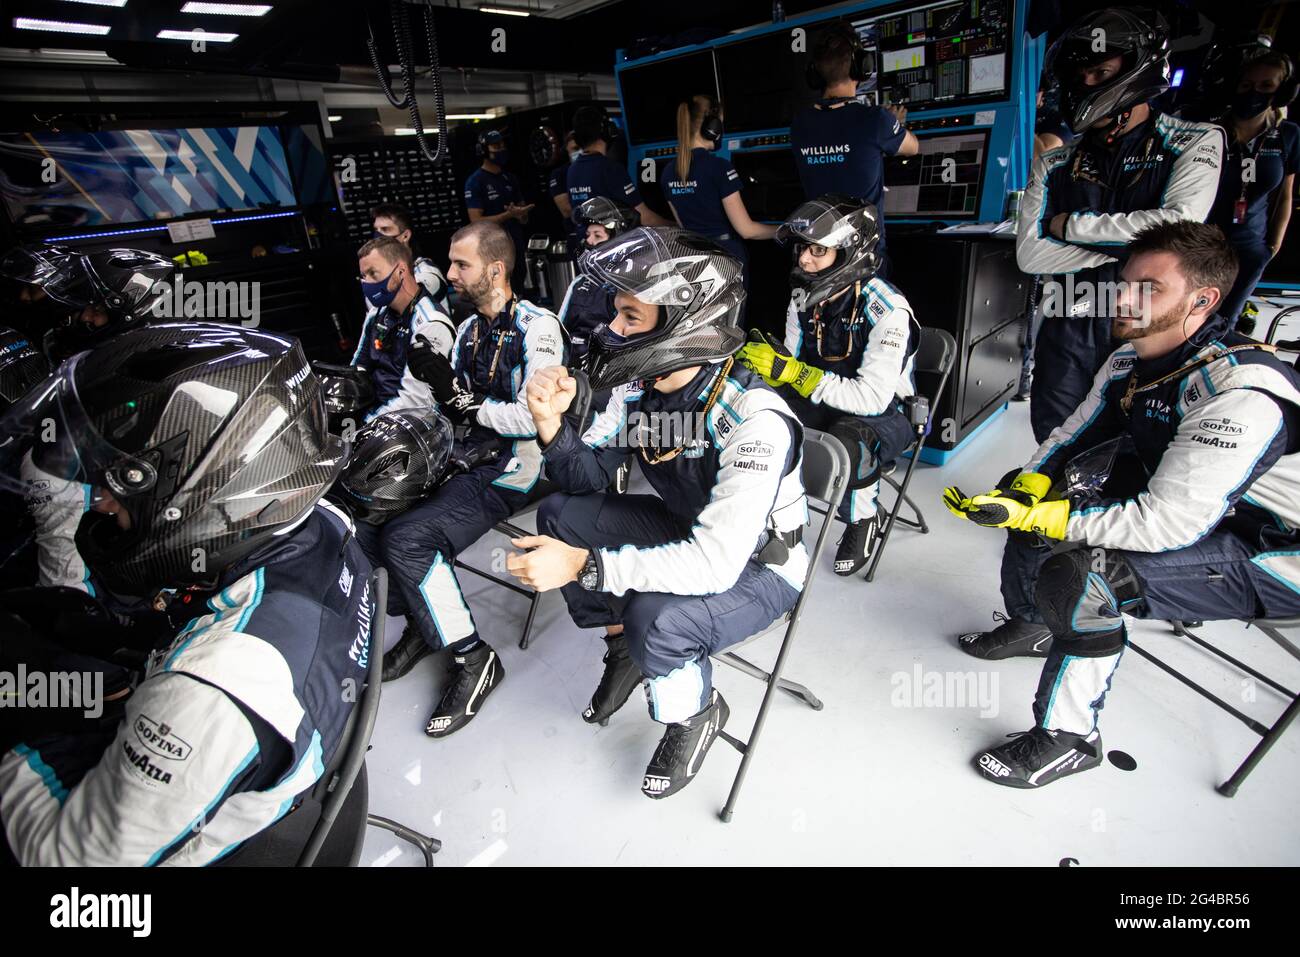 Williams Racing mechanics watch the race. French Grand Prix, Sunday 20th June 2021. Paul Ricard, France. Stock Photo